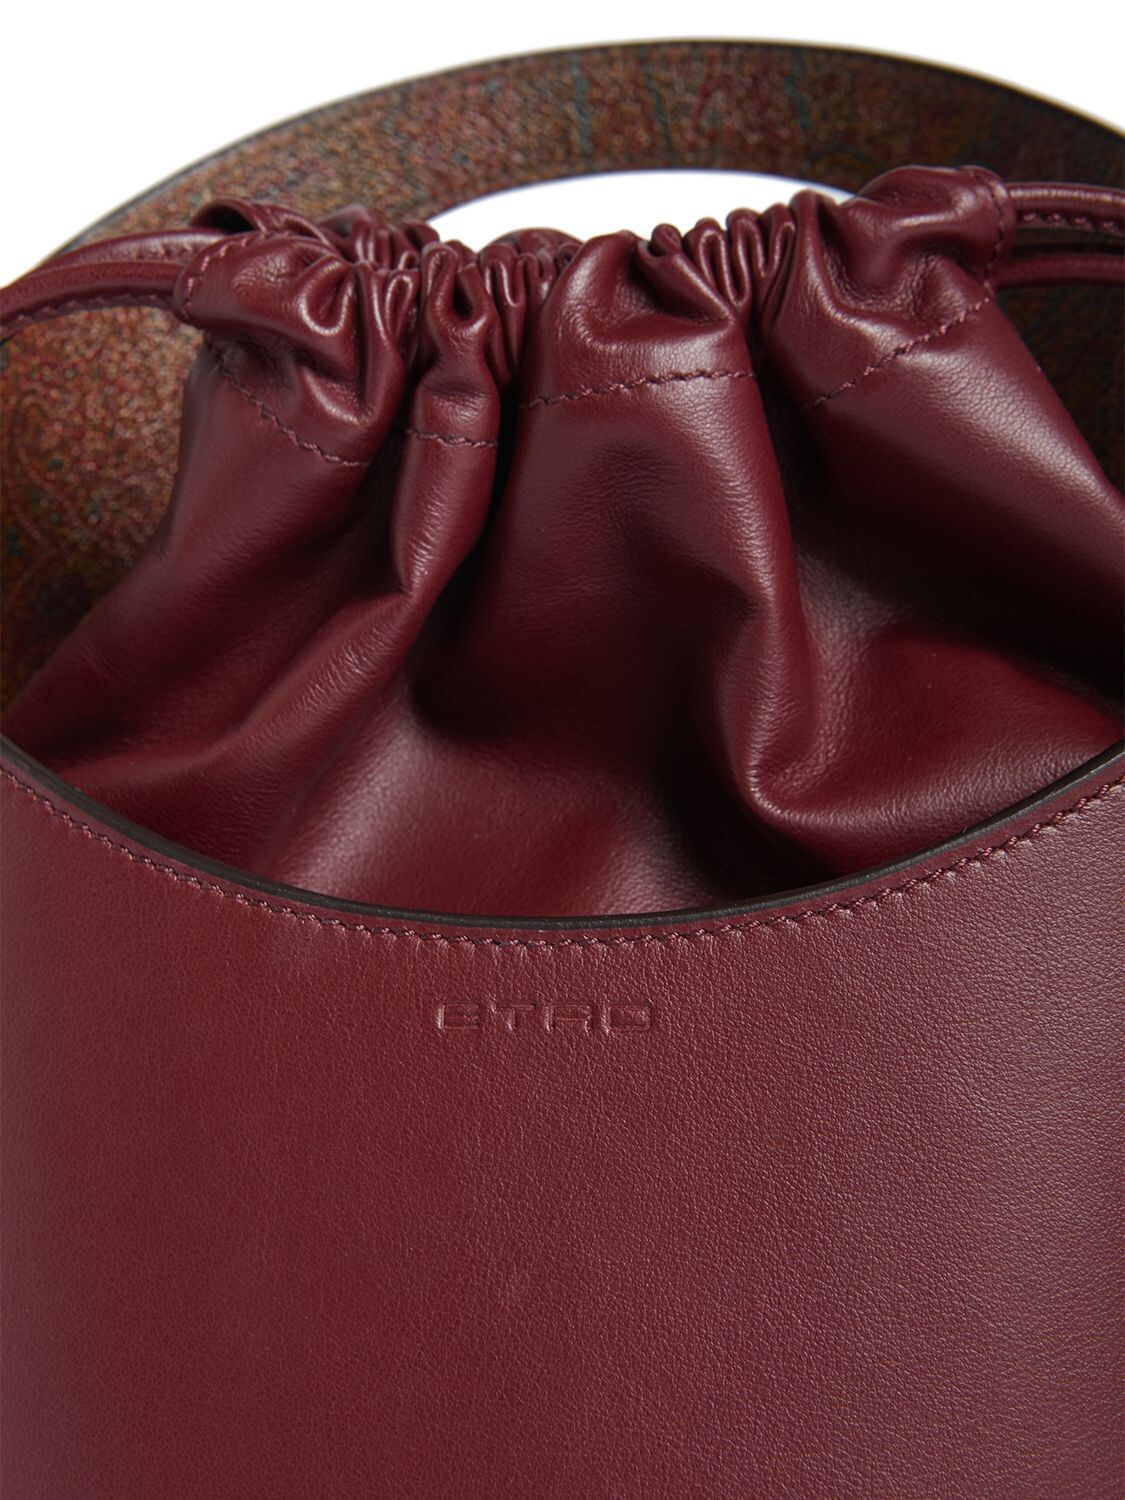 Shop Etro Medium Saturno Leather Top Handle Bag In Bordeaux